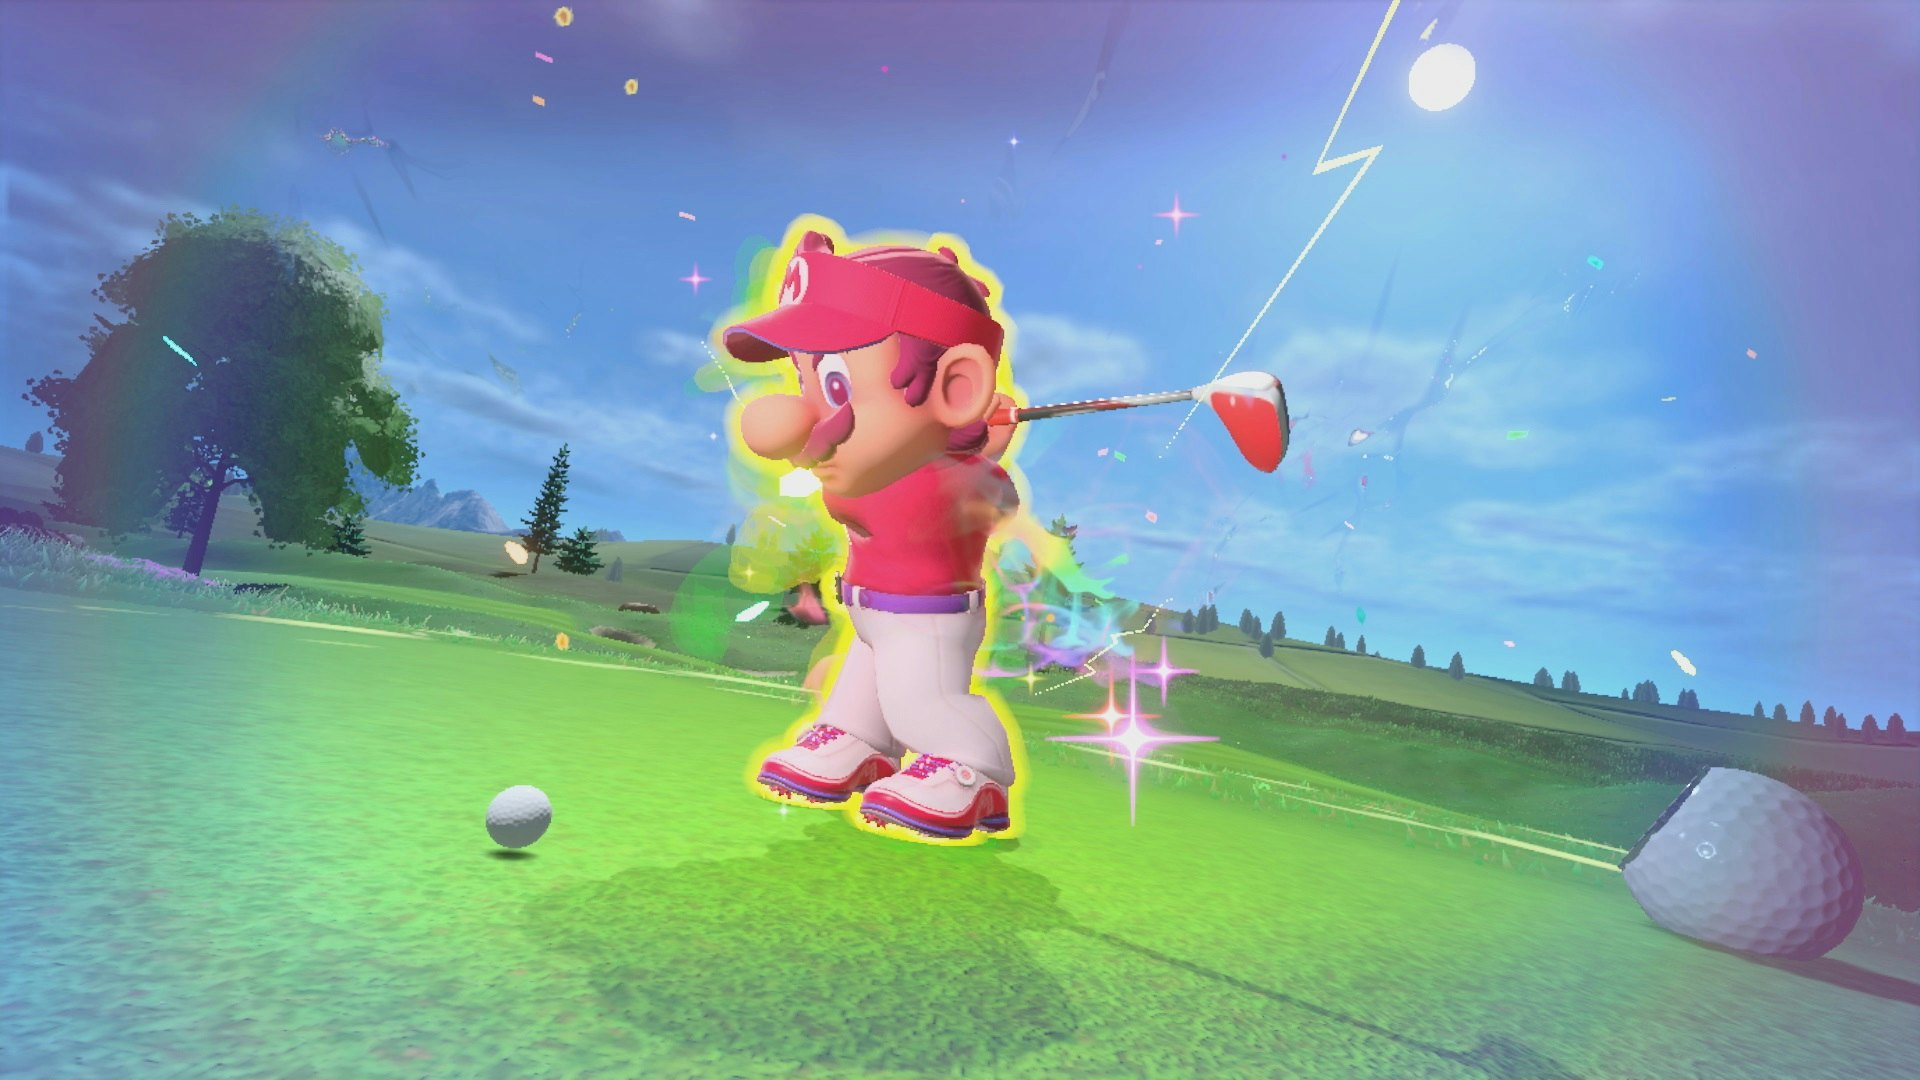 new mario golf game